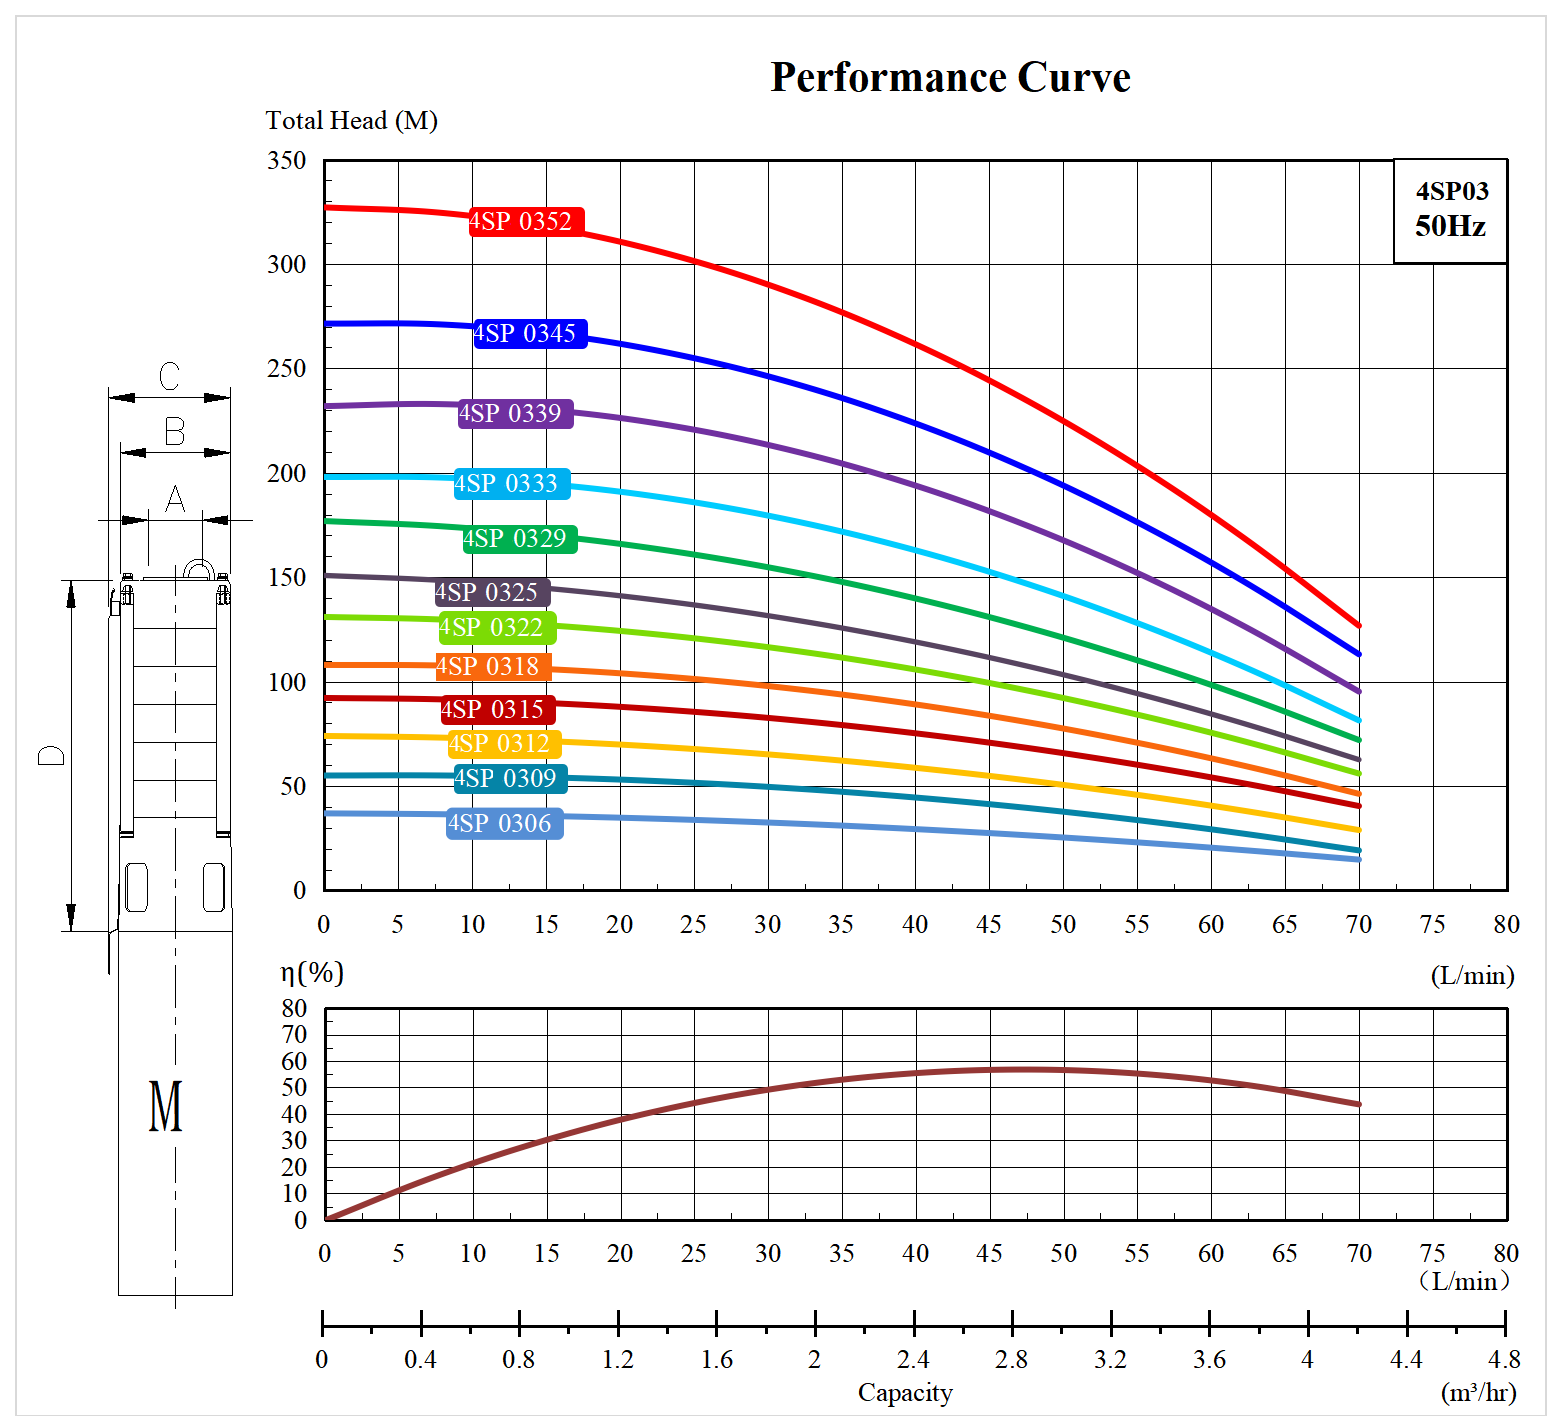  характеристики насос свердловинний 4SP0312 заміна та аналог насоса ЭЦВ4-2,5-50 